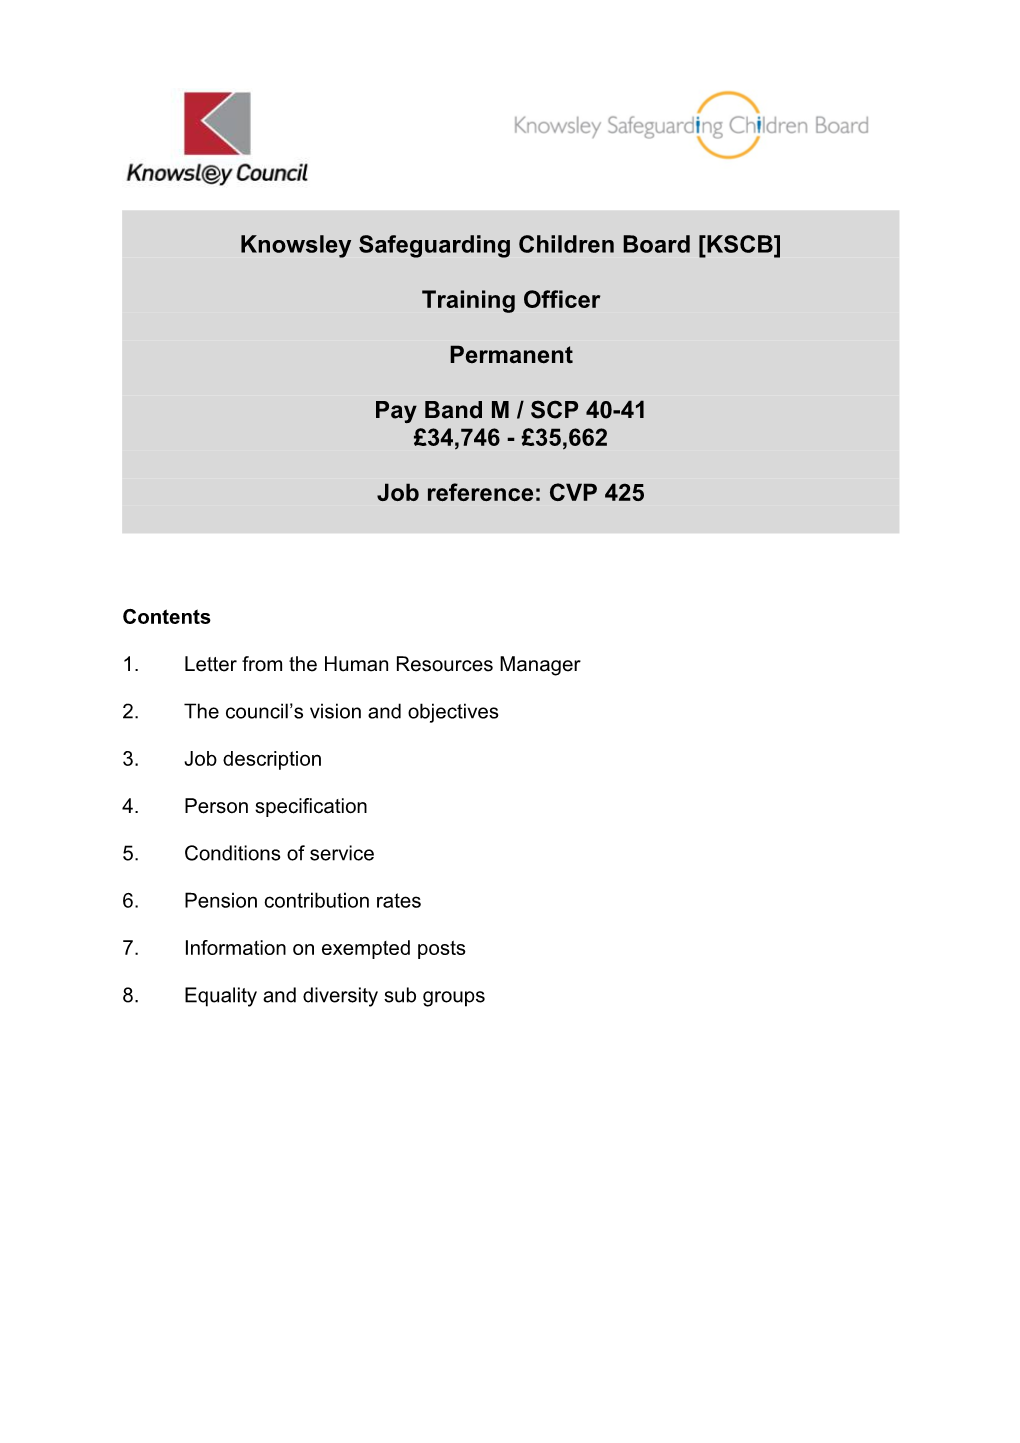 Knowsley Safeguarding Children Board KSCB